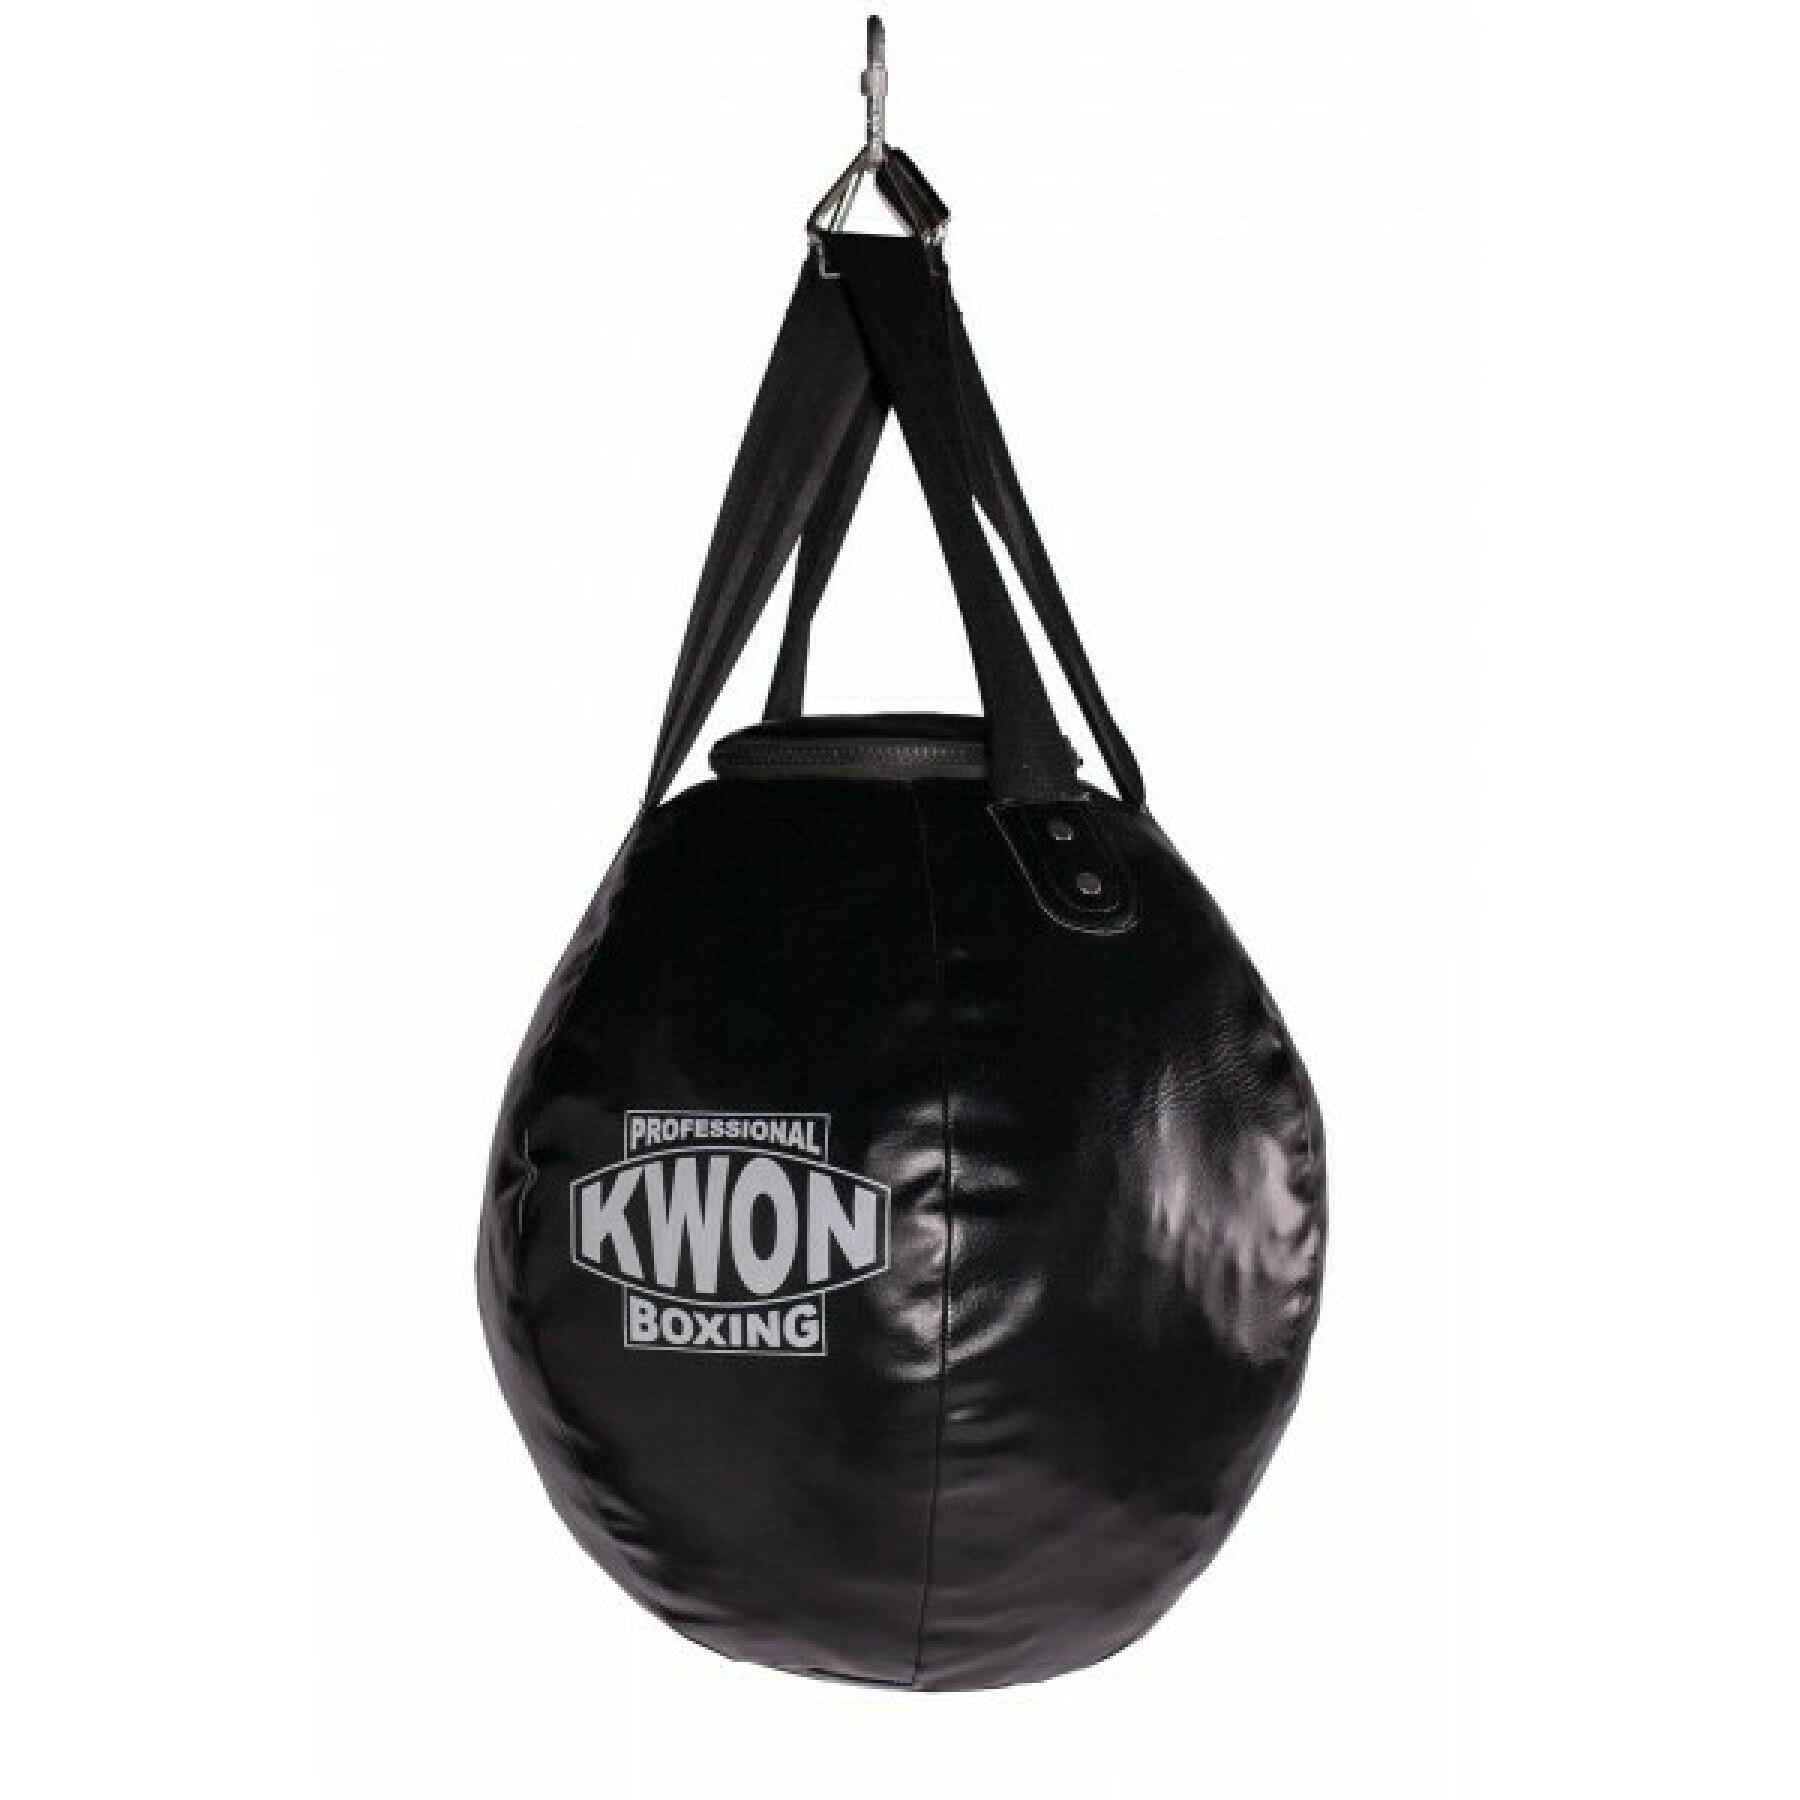 Bokszak Kwon Professional Boxing Prof.Box. rund